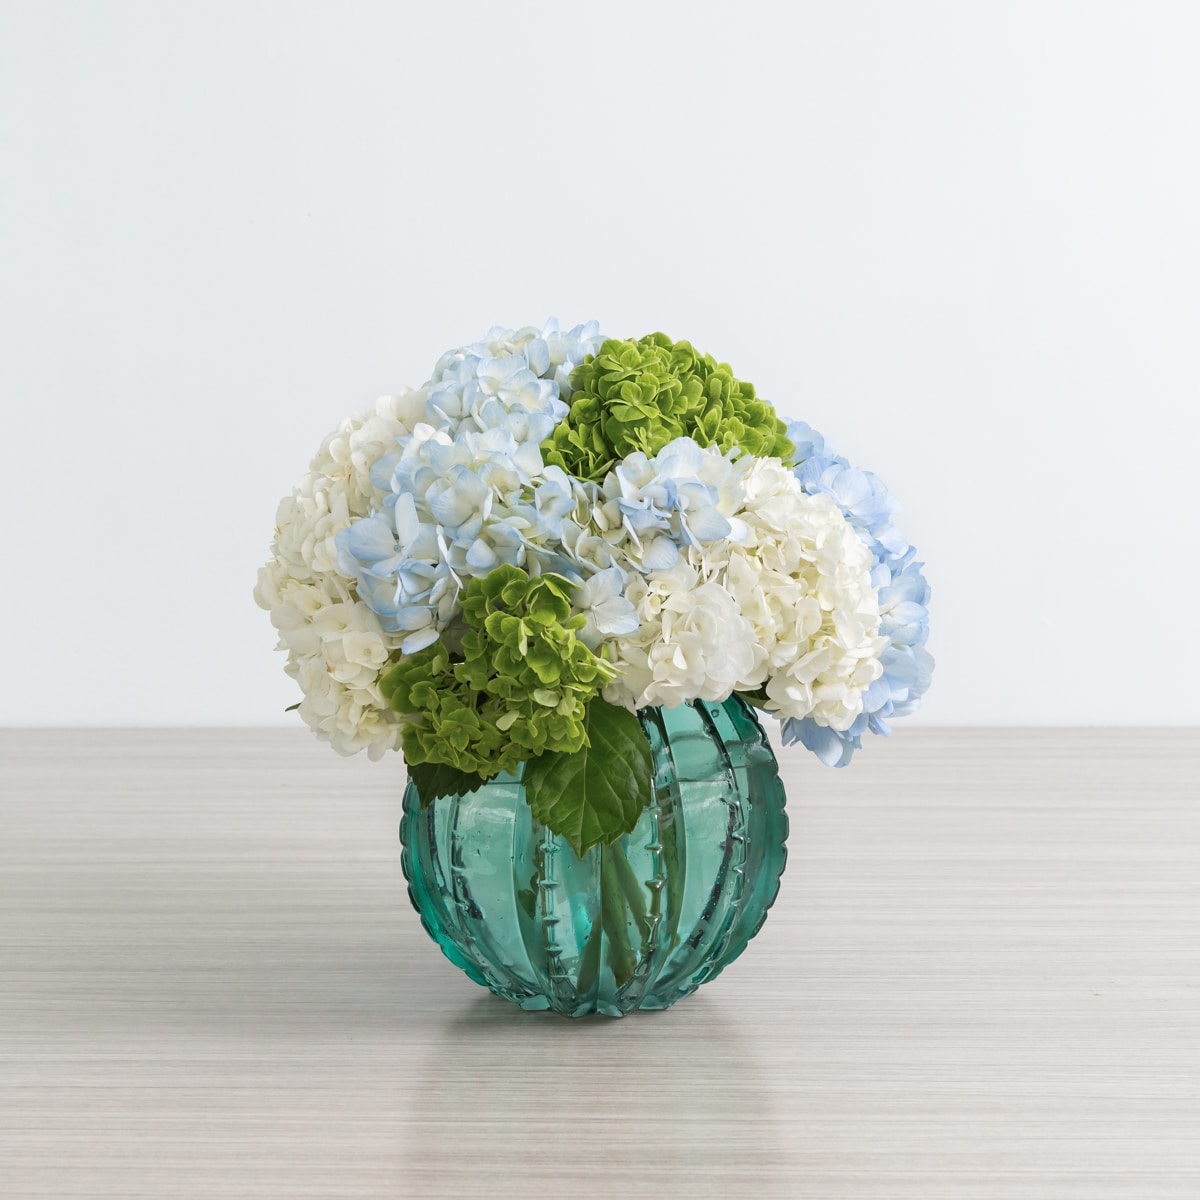 Peridot vase arrangement with assorted hydrangeas from Le Bouquet St.Laurent